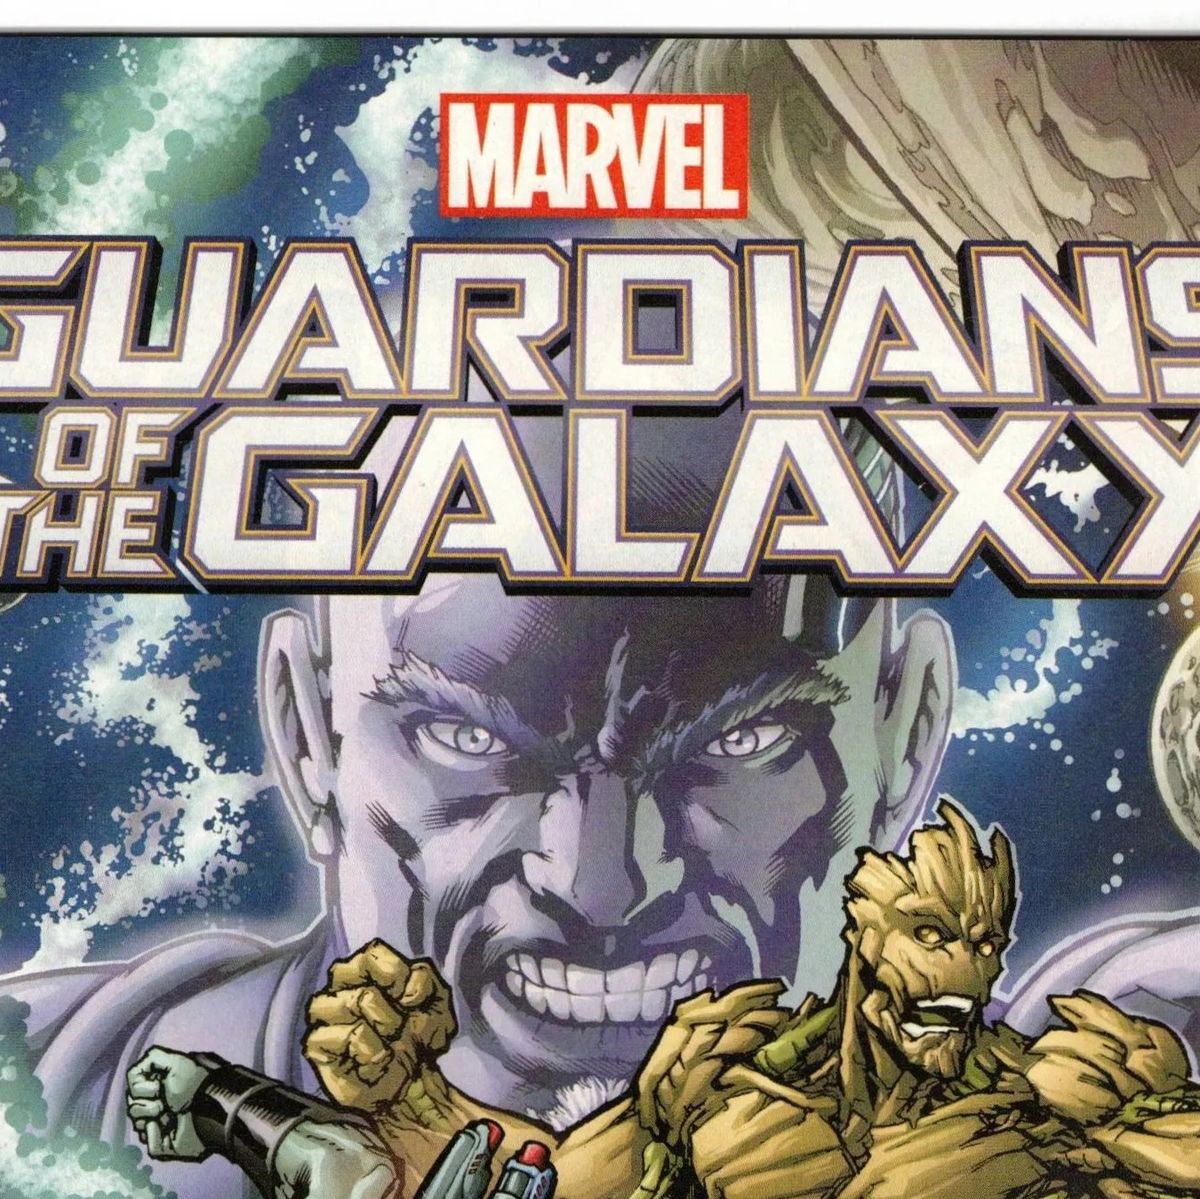 Star-Lord  Star lord comic, Marvel characters art, Image comics